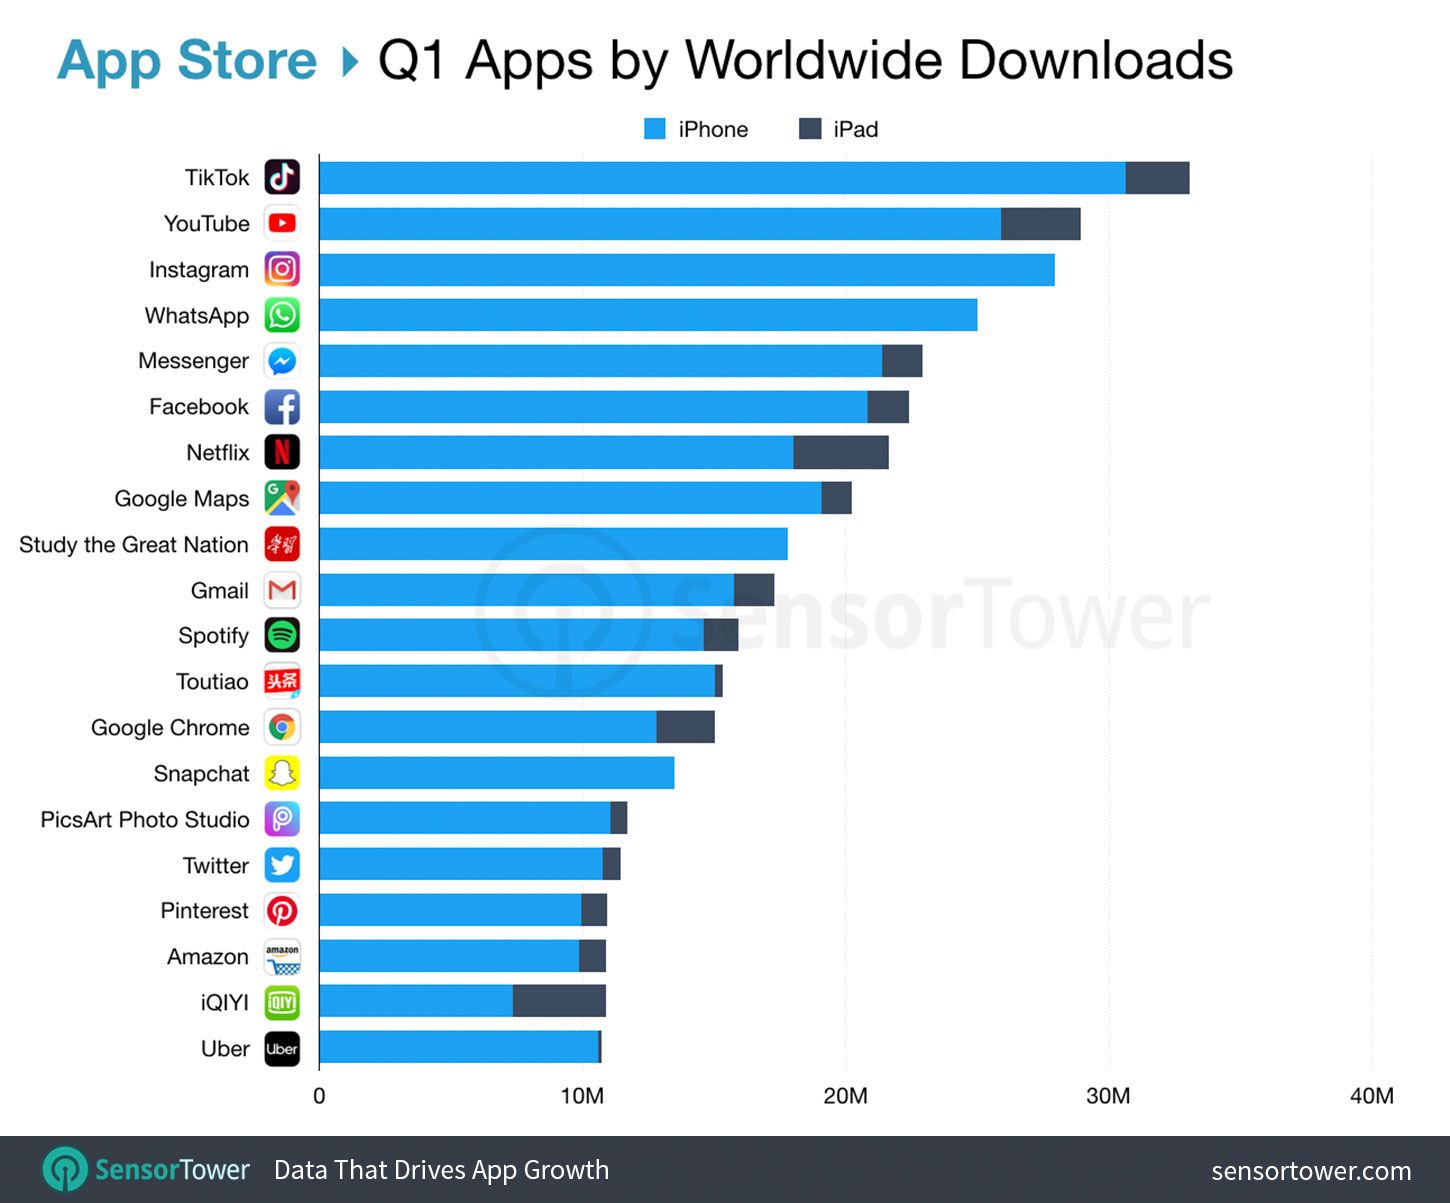 TikTok - Still No. 1 App in AppStore for 5th Consecutive Quarter